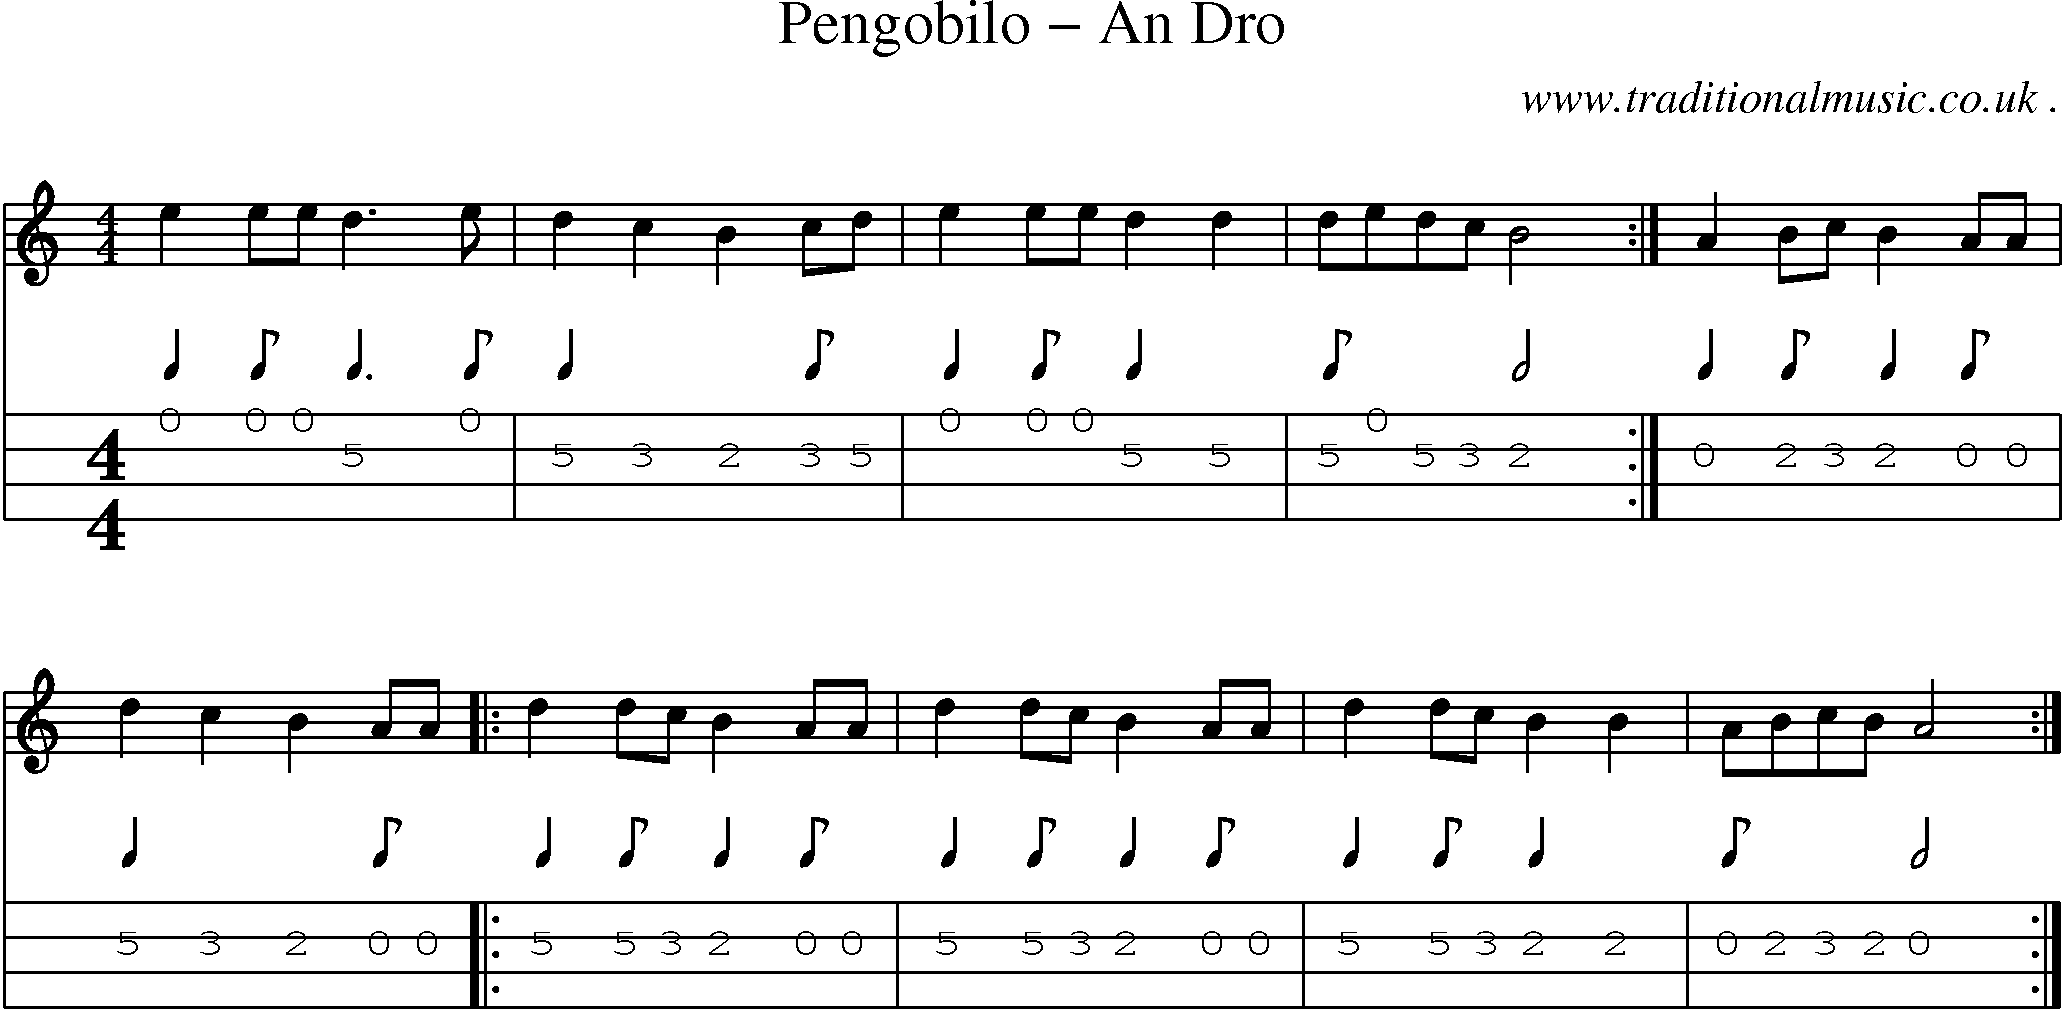 Sheet-Music and Mandolin Tabs for Pengobilo An Dro